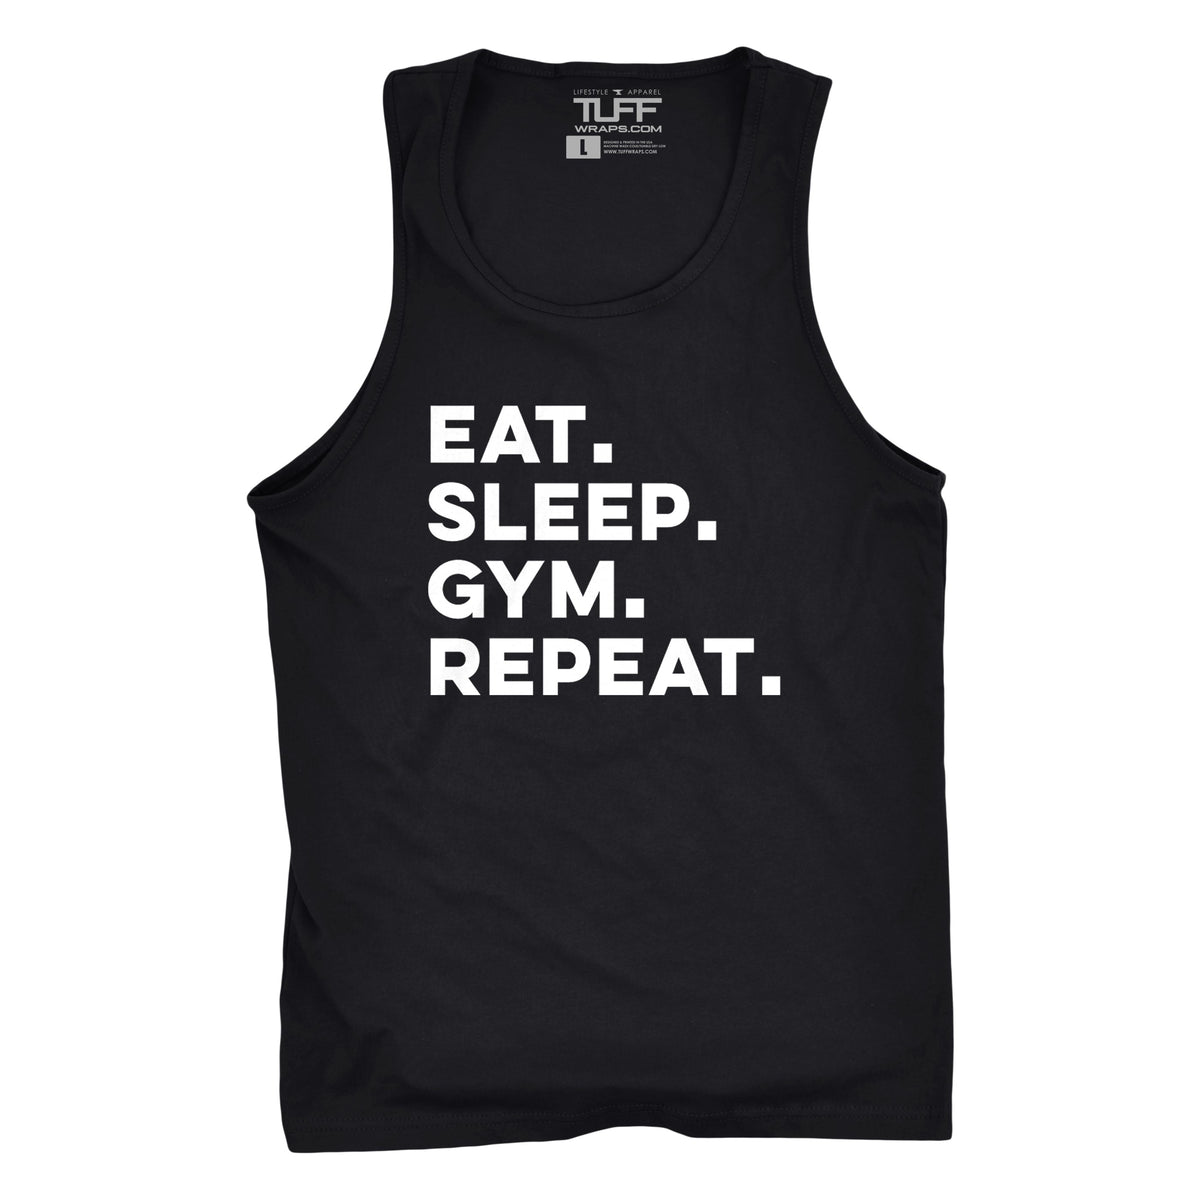 Eat. Sleep. Gym. Repeat. Tank S / Black TuffWraps.com